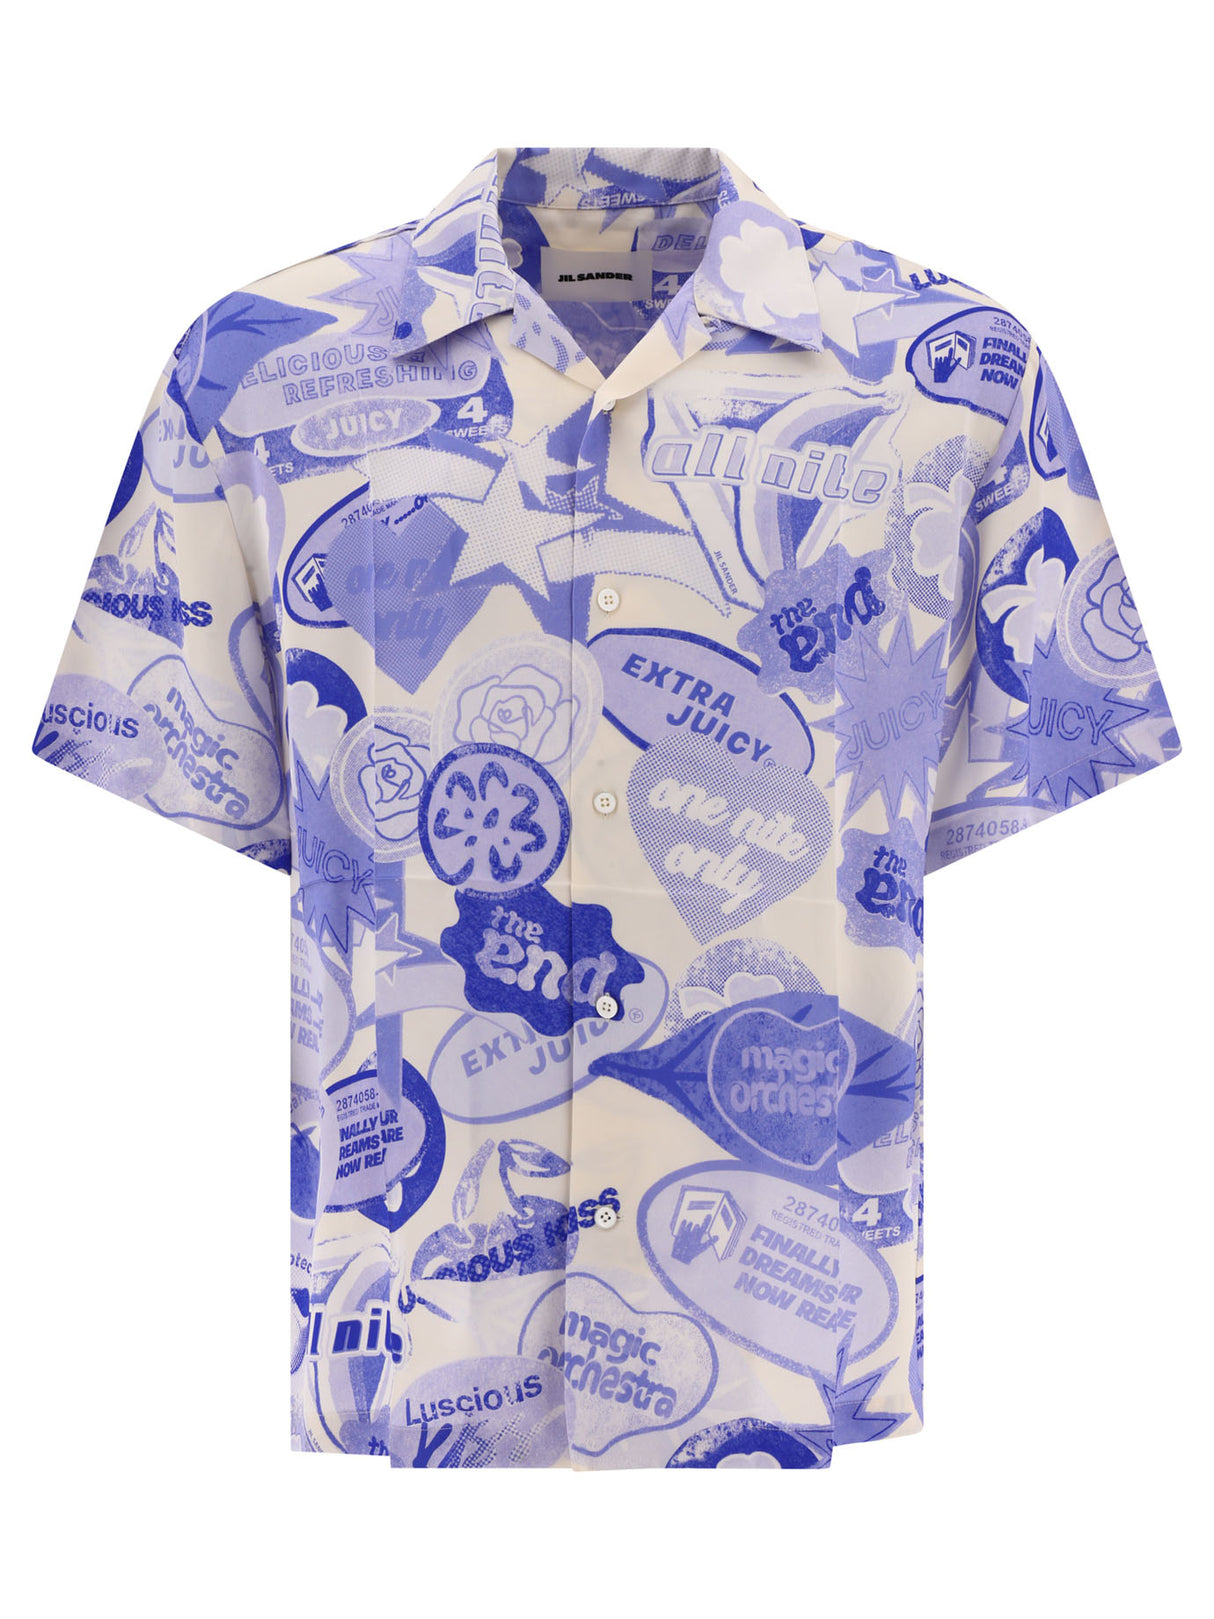 Classic Light Blue Printed Shirt for Men - JIL SANDER